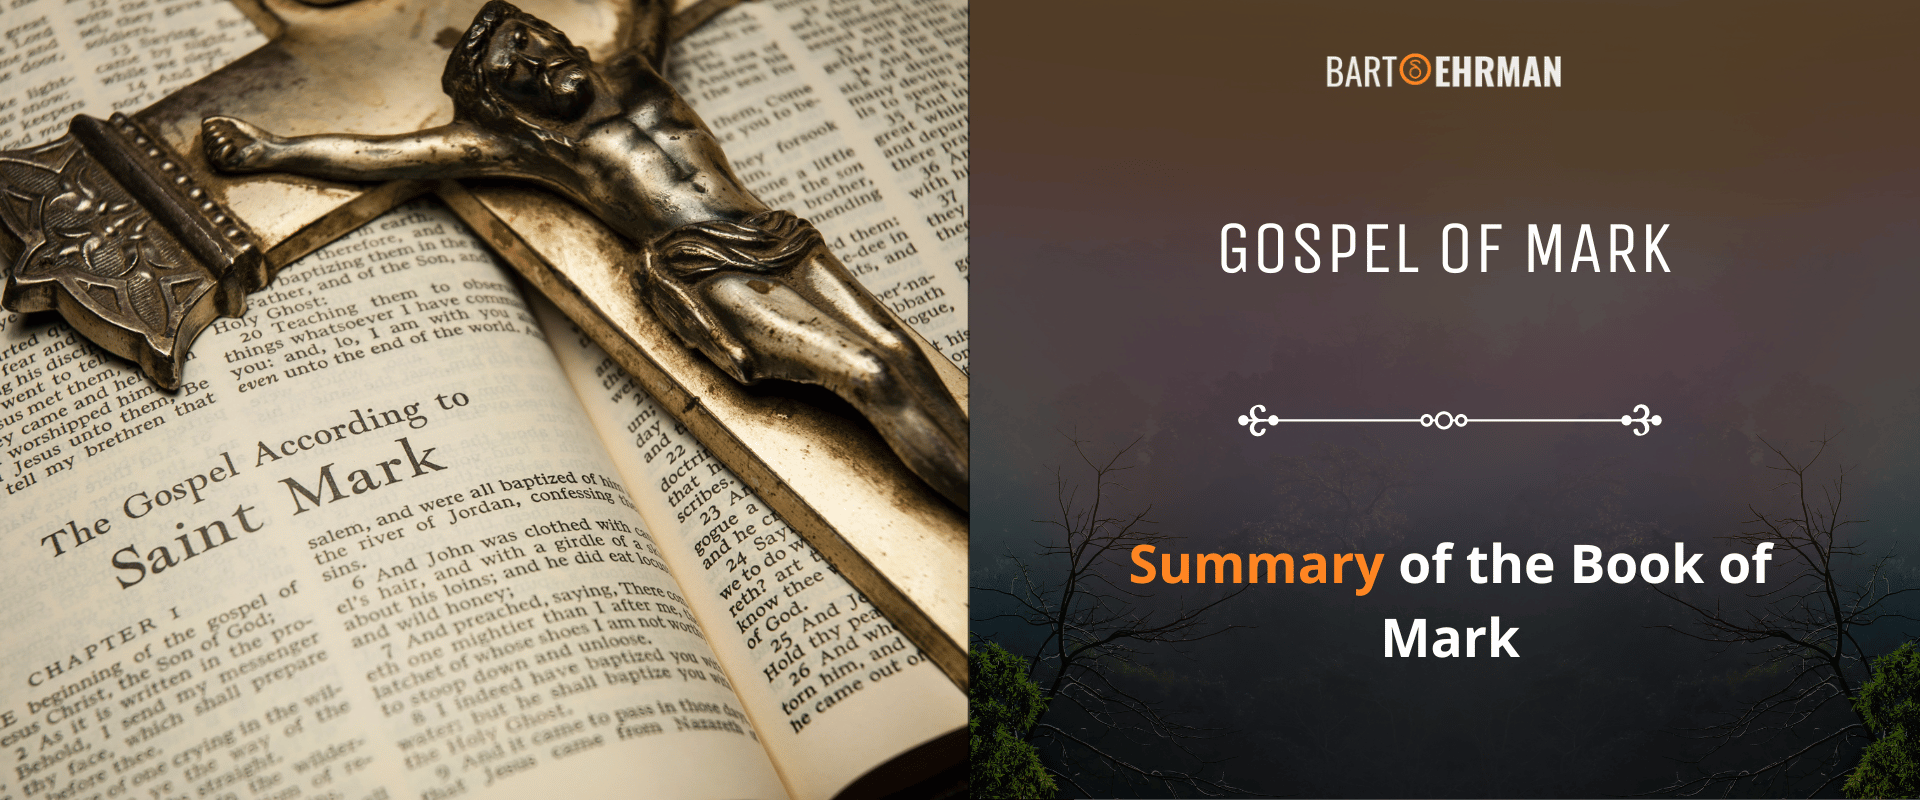 Gospel of Mark - Summary of the Book of Mark